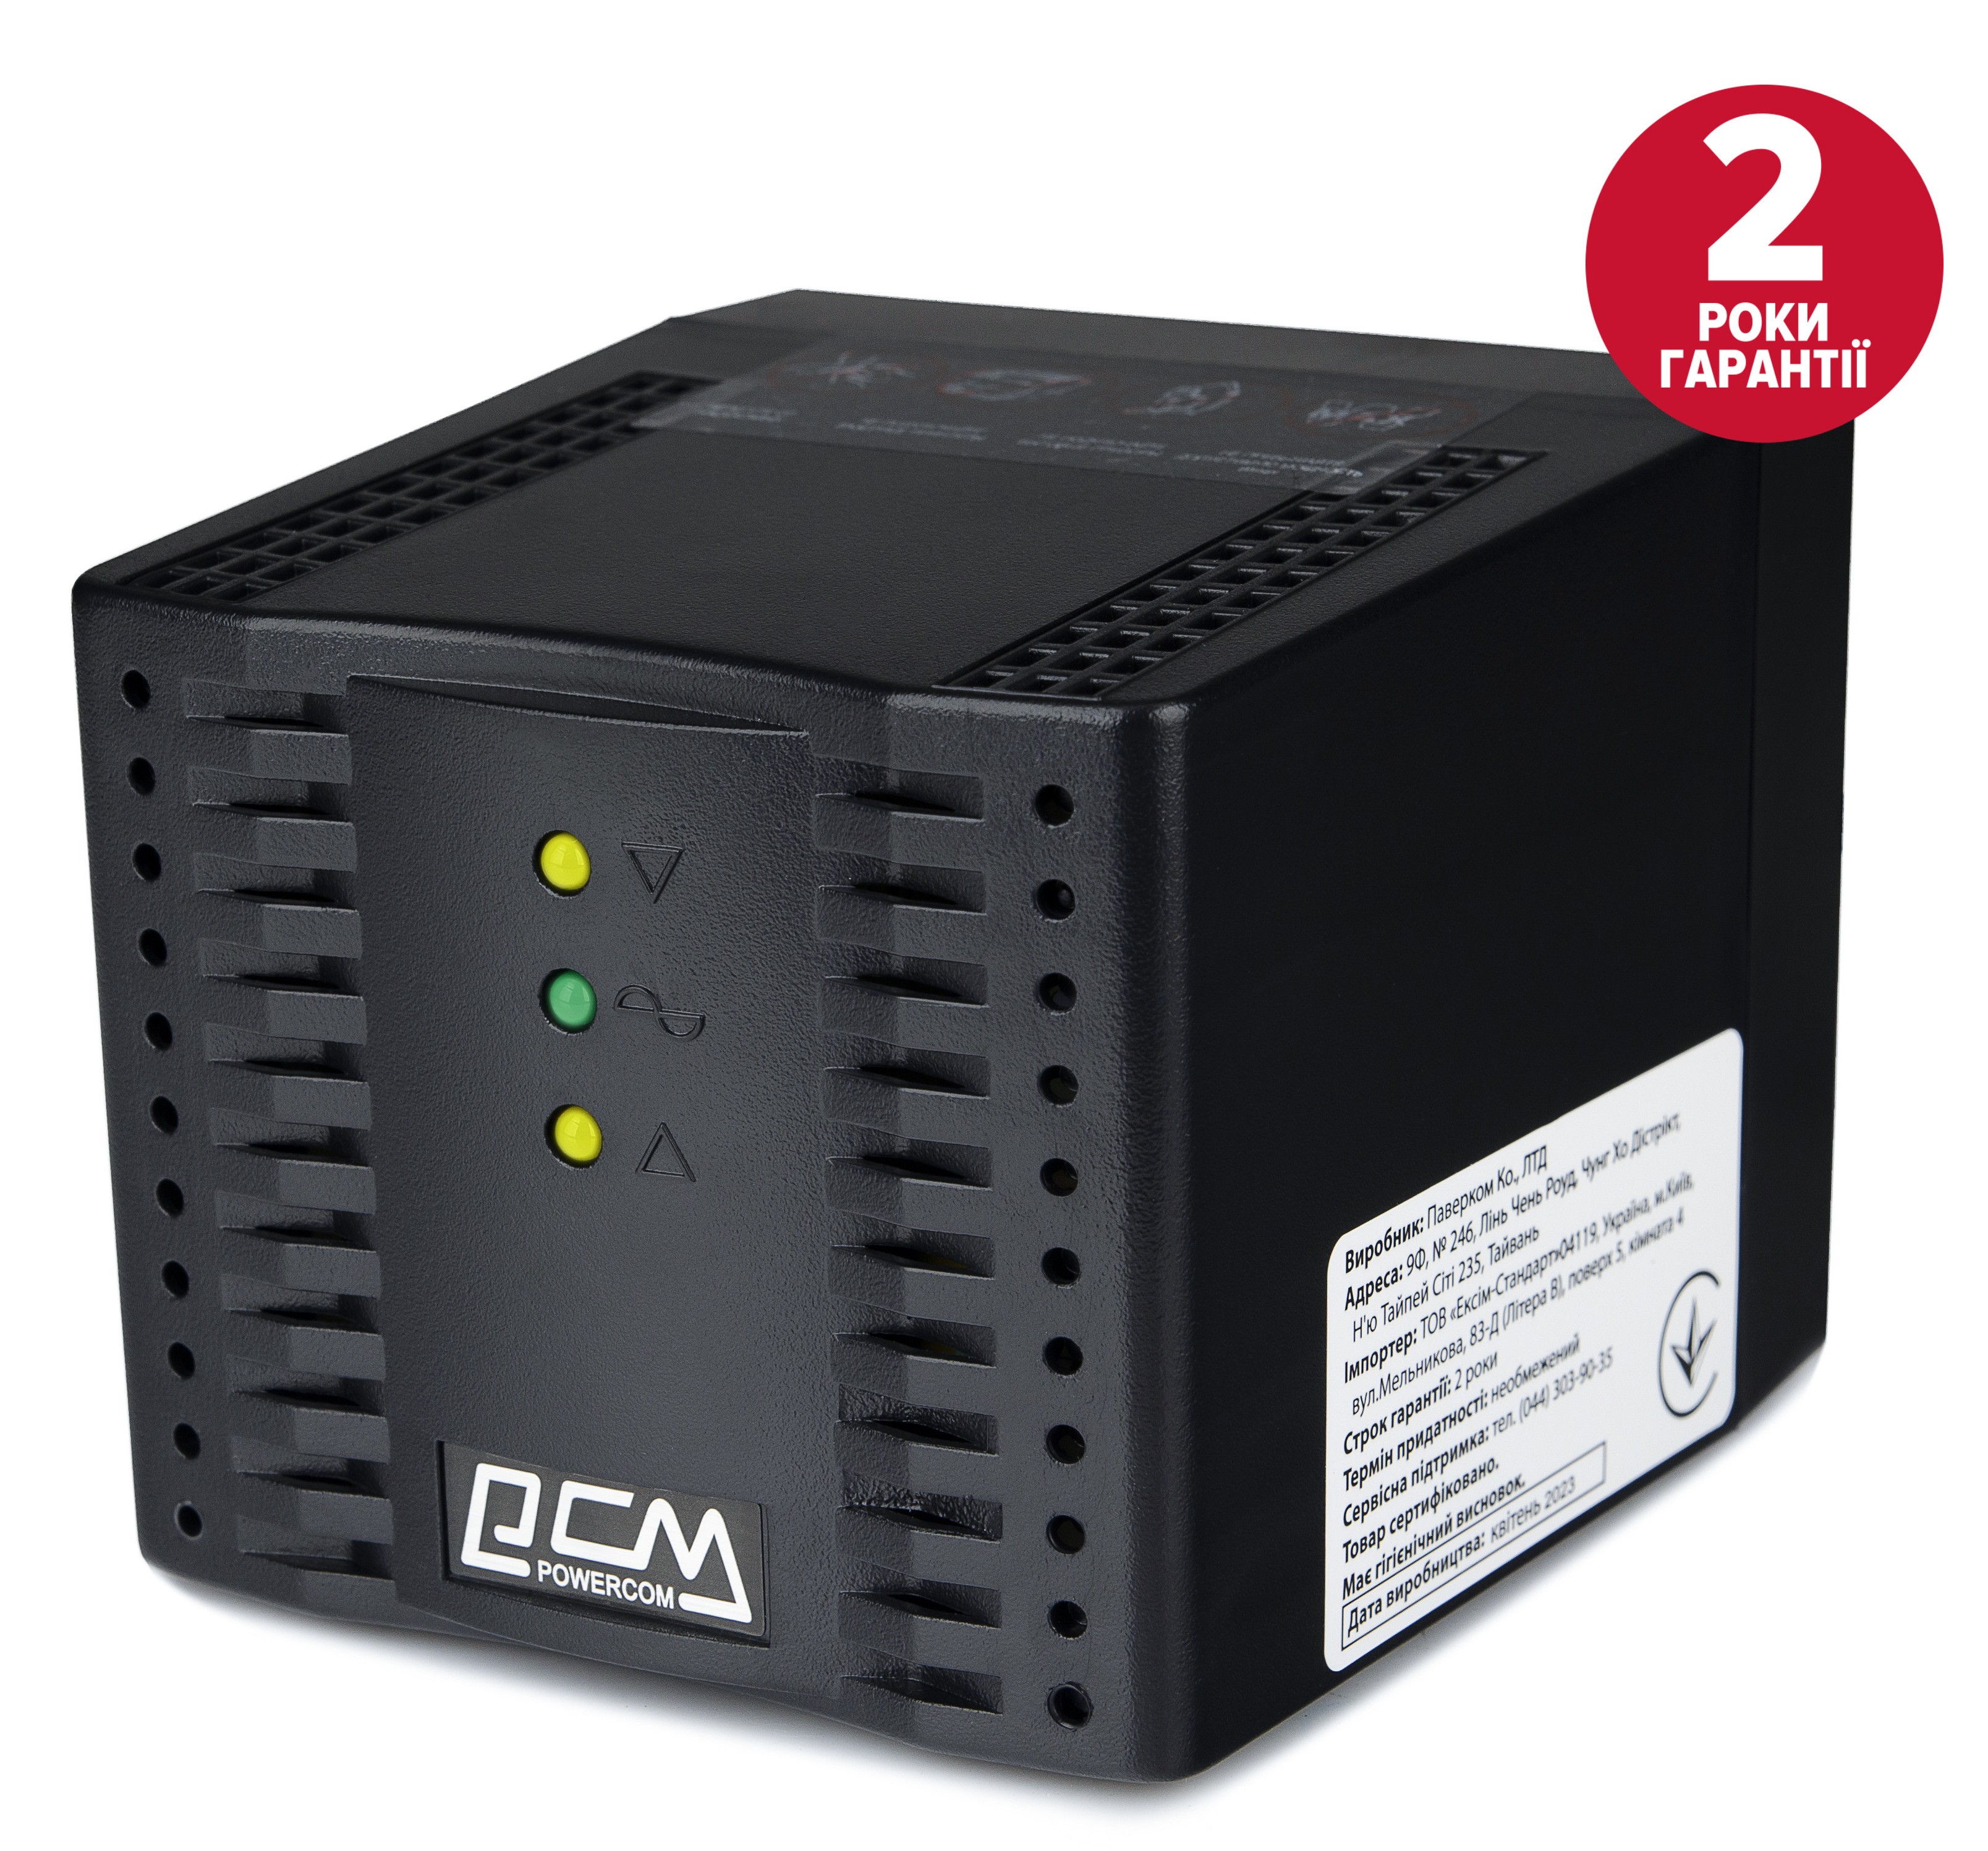 Стабилизатор напряжения Powercom TCA-600 black цена 1008.70 грн - фотография 2